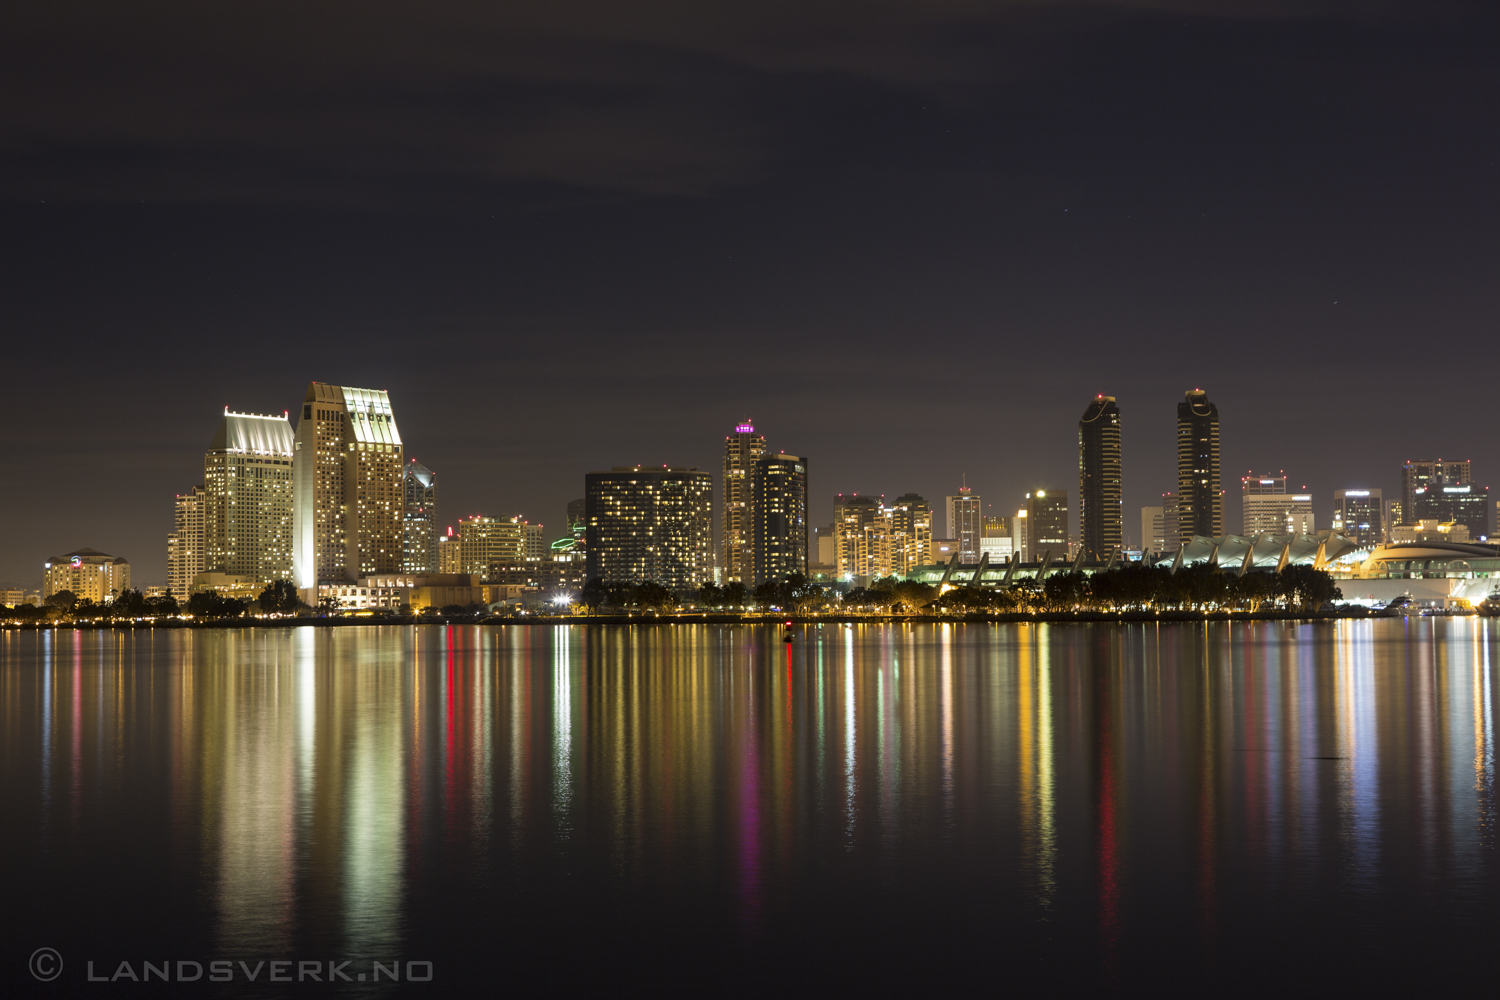 San Diego, California. 

(Canon EOS 5D Mark III / Canon EF 24-70mm f/2.8 L USM)